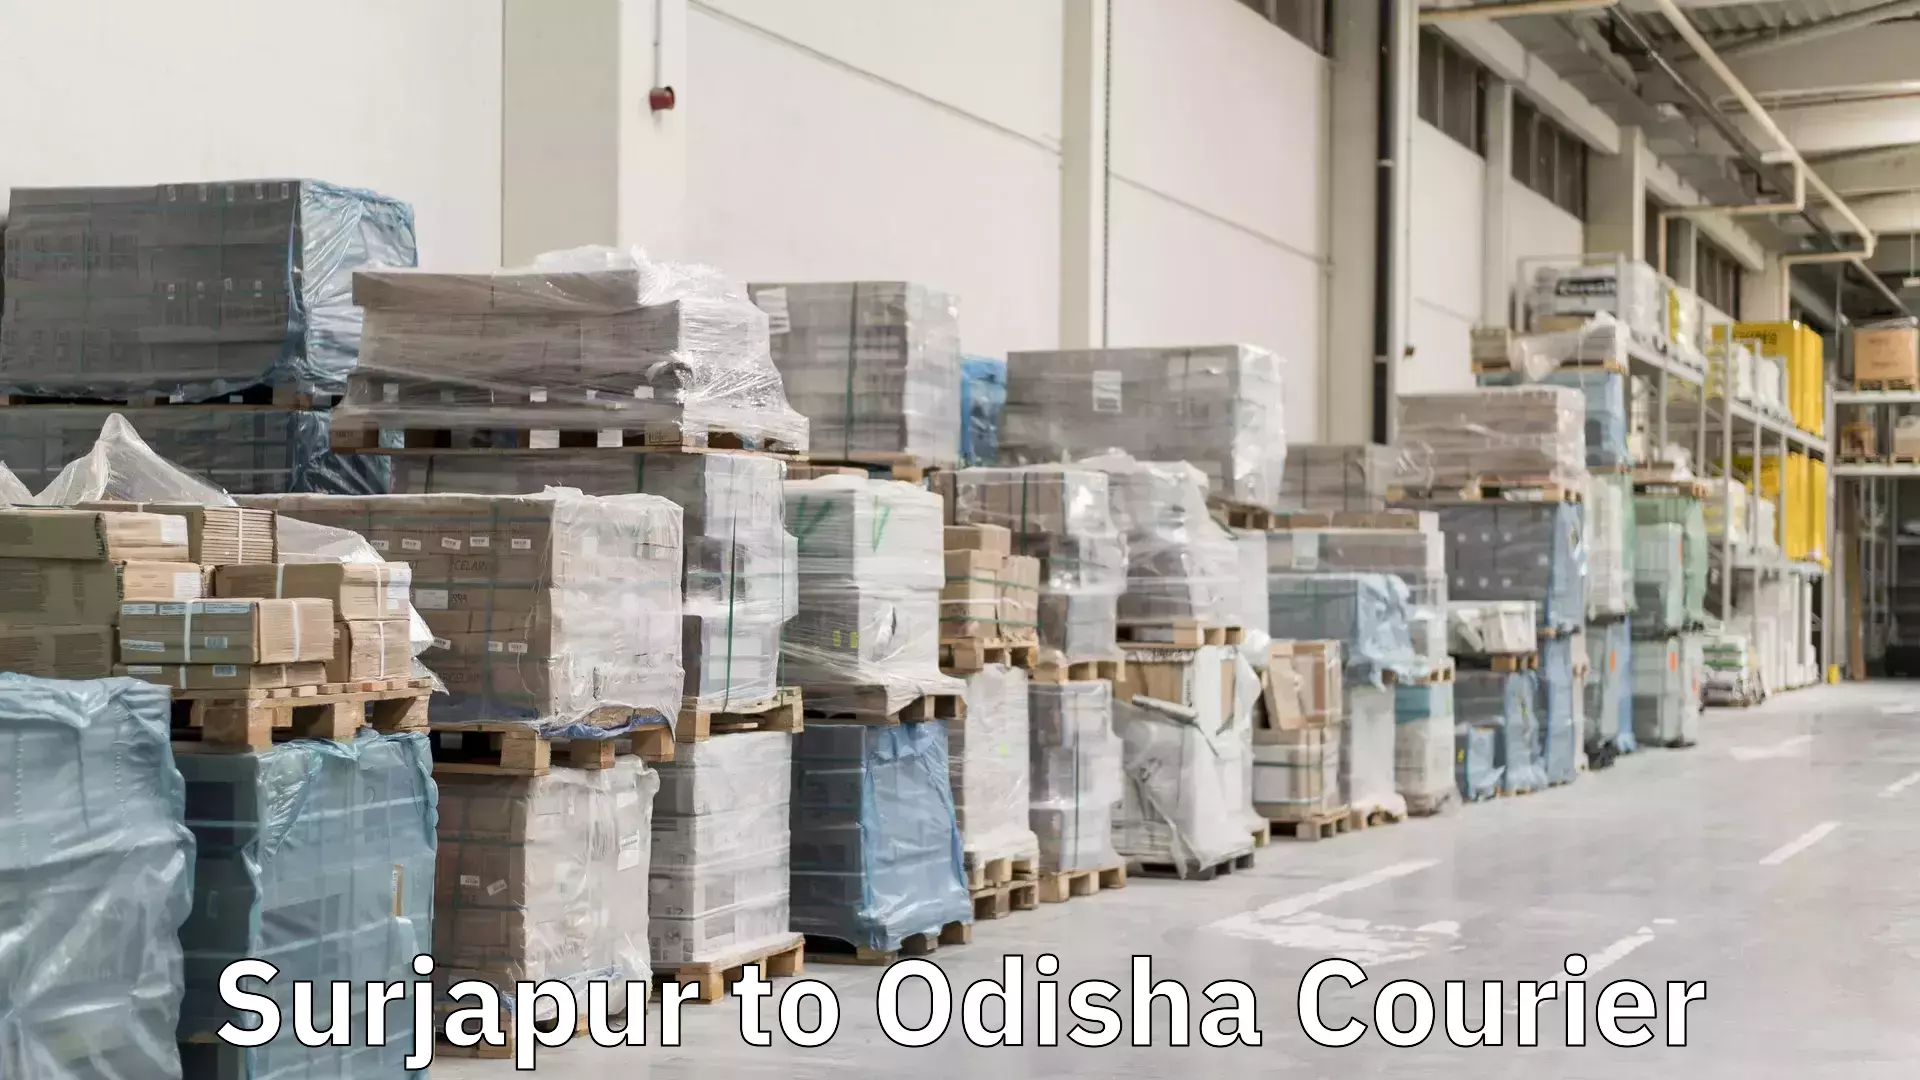 Doorstep delivery service Surjapur to Odisha